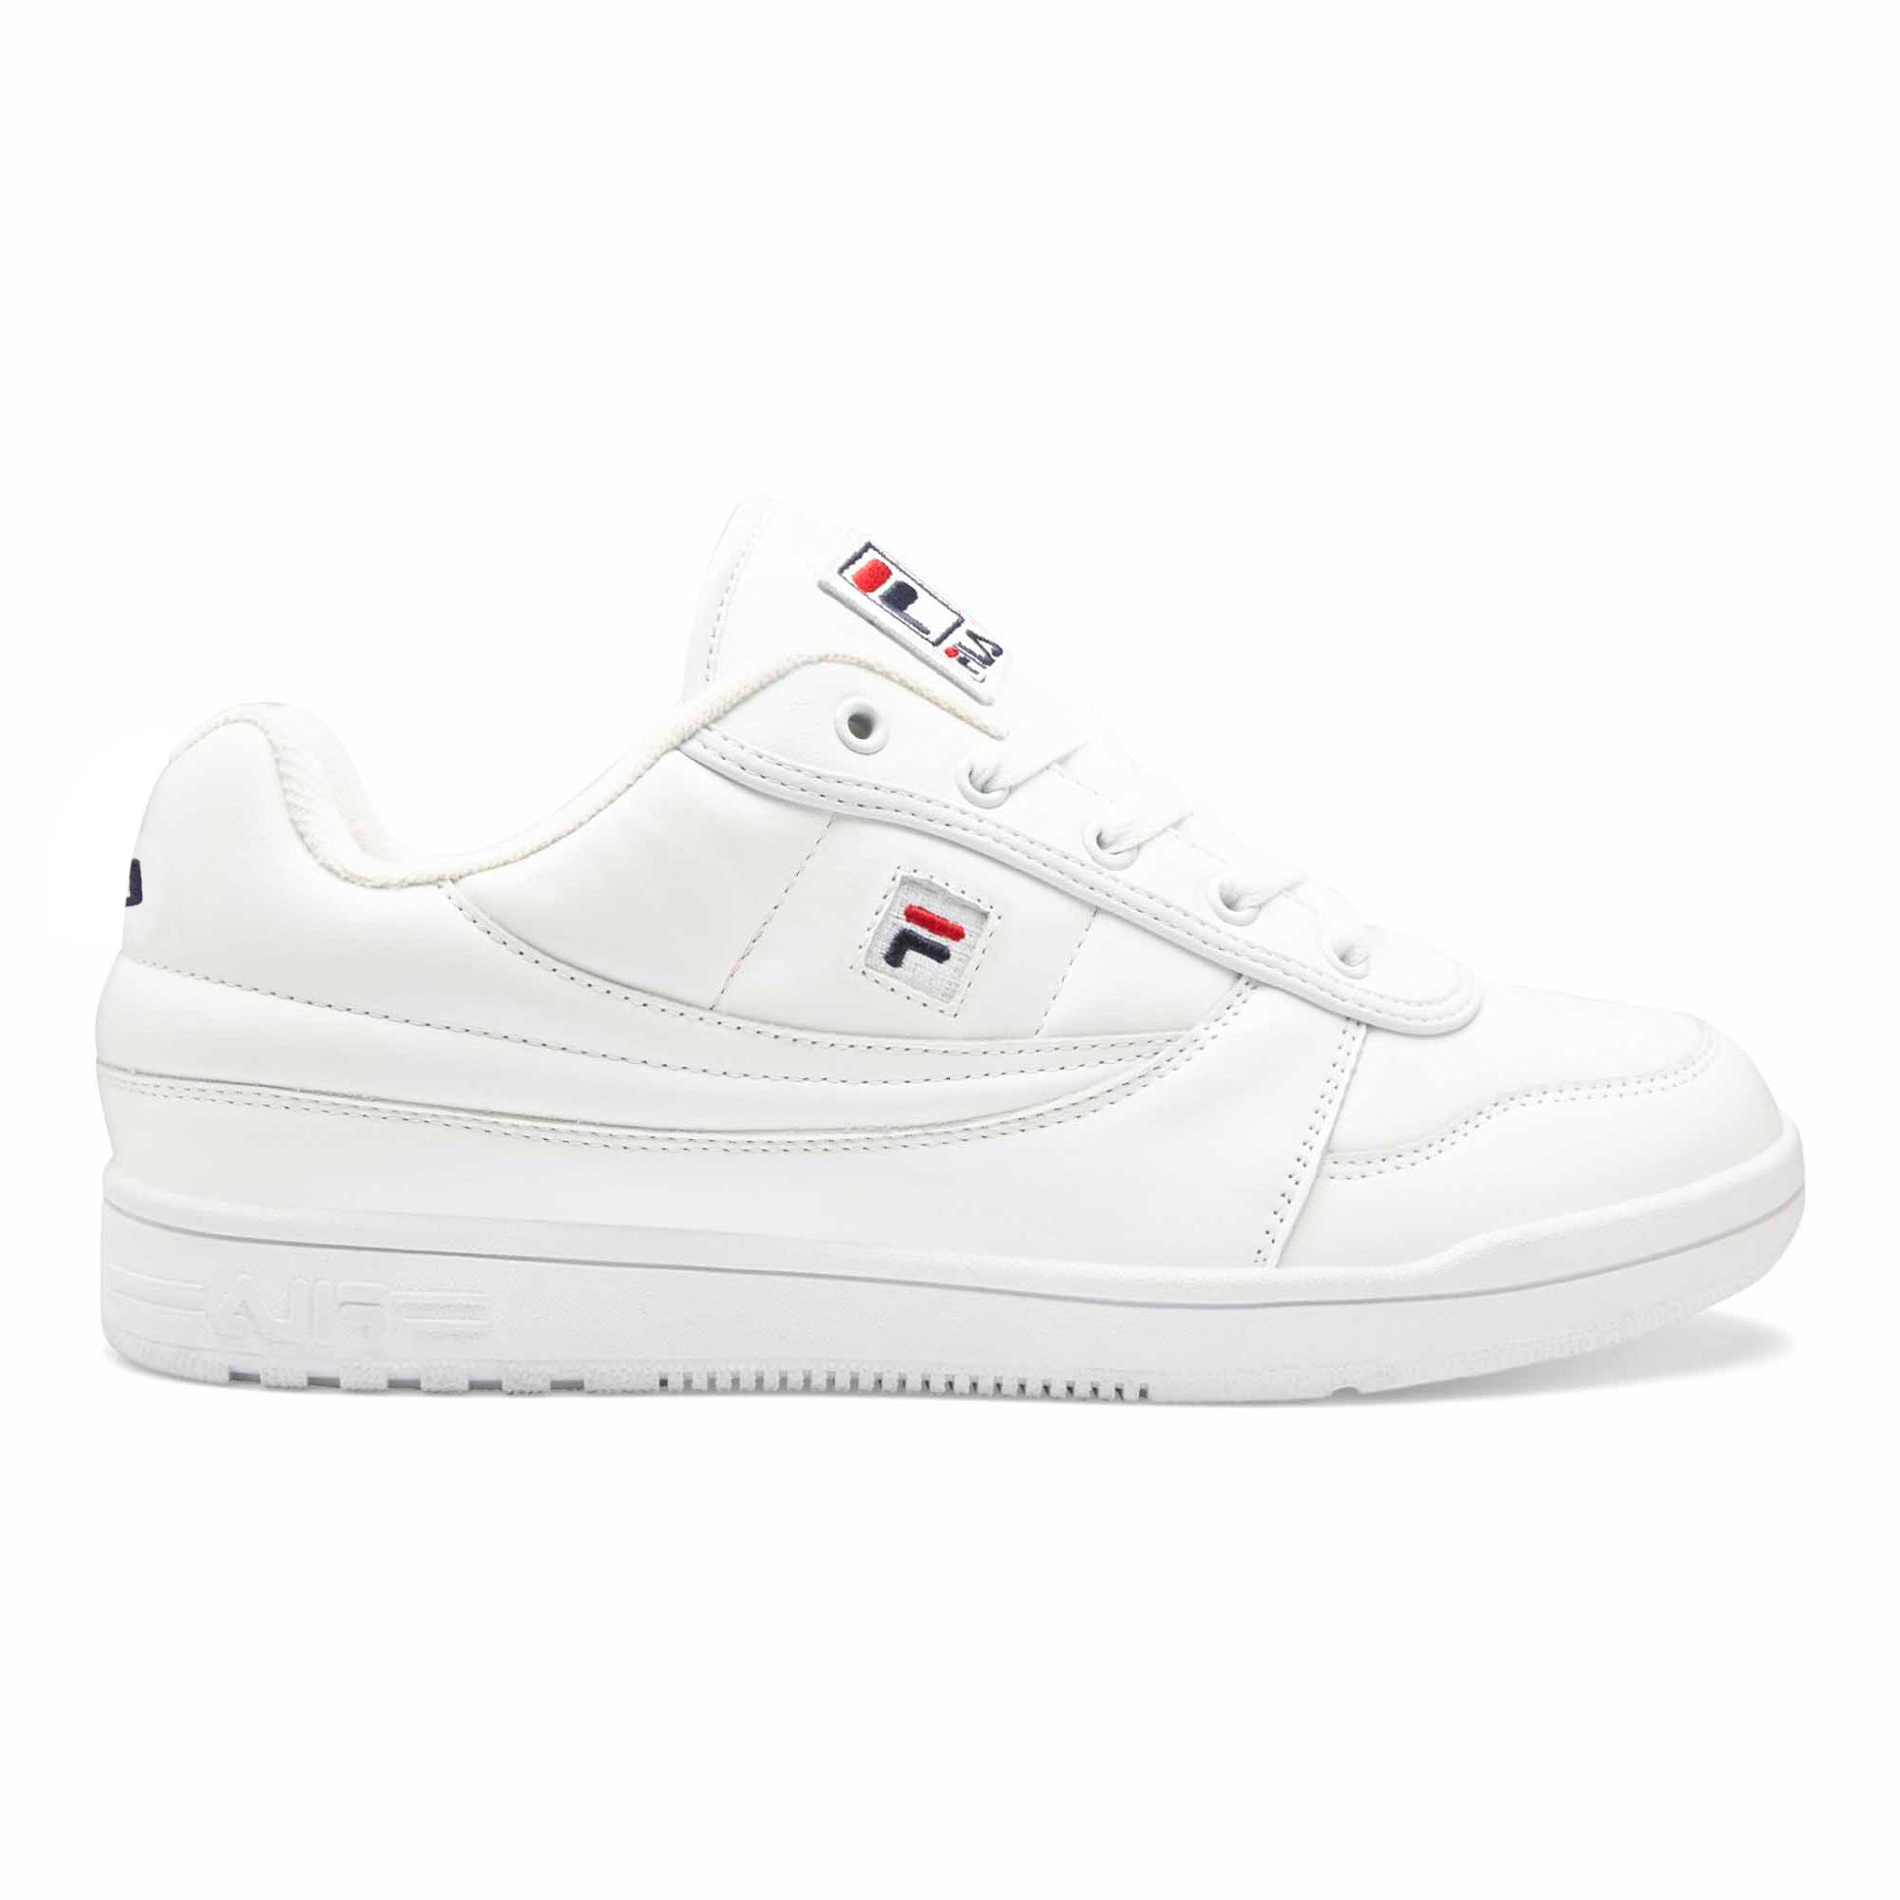 Fila Men's BBN 84 Low Sneaker - White/Navy/Red